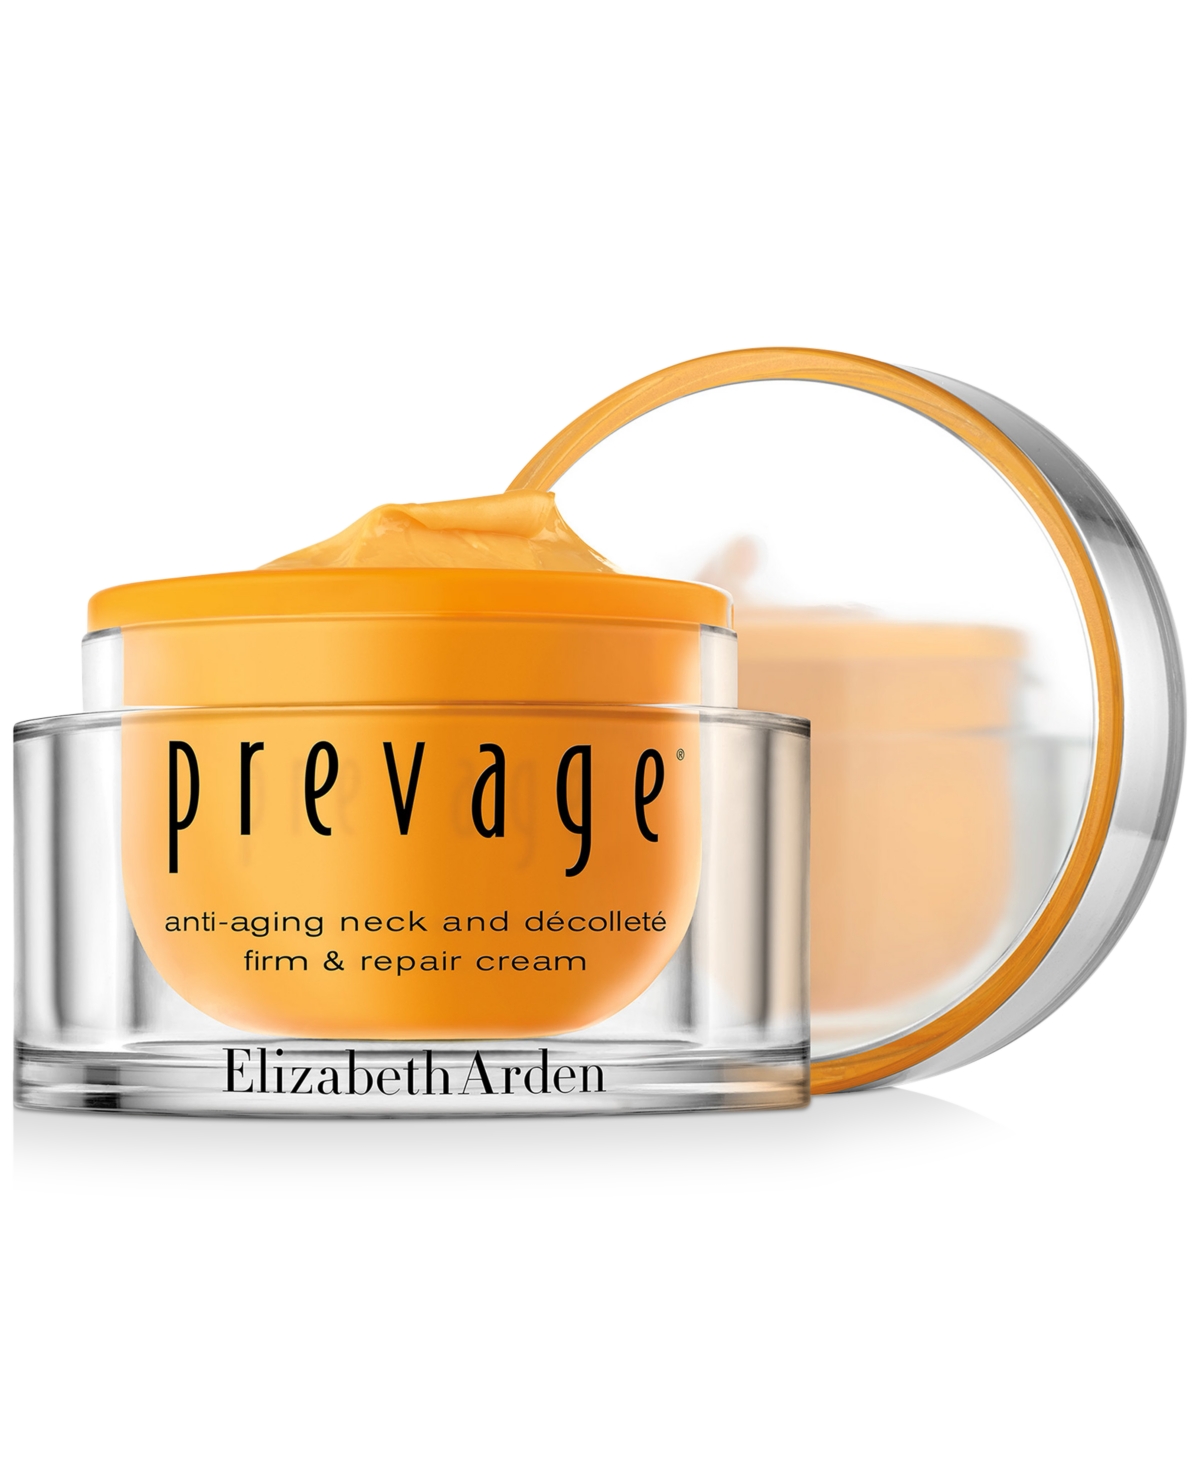 Prevage Anti-Aging Neck and Decollete Firm & Repair Cream, 1.7 oz